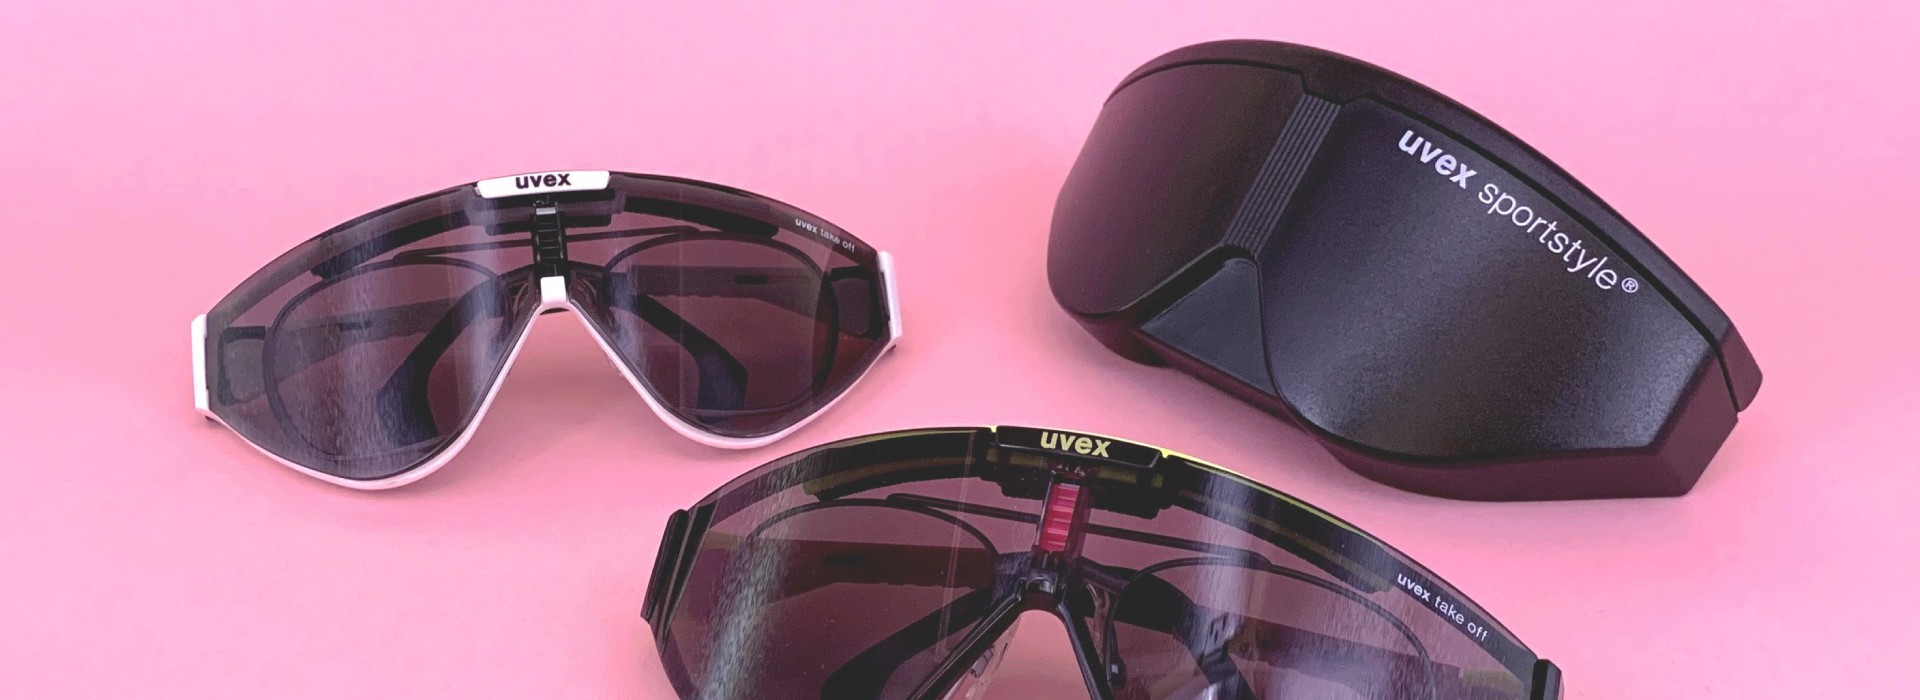 Uvex designer vintage sunglasses